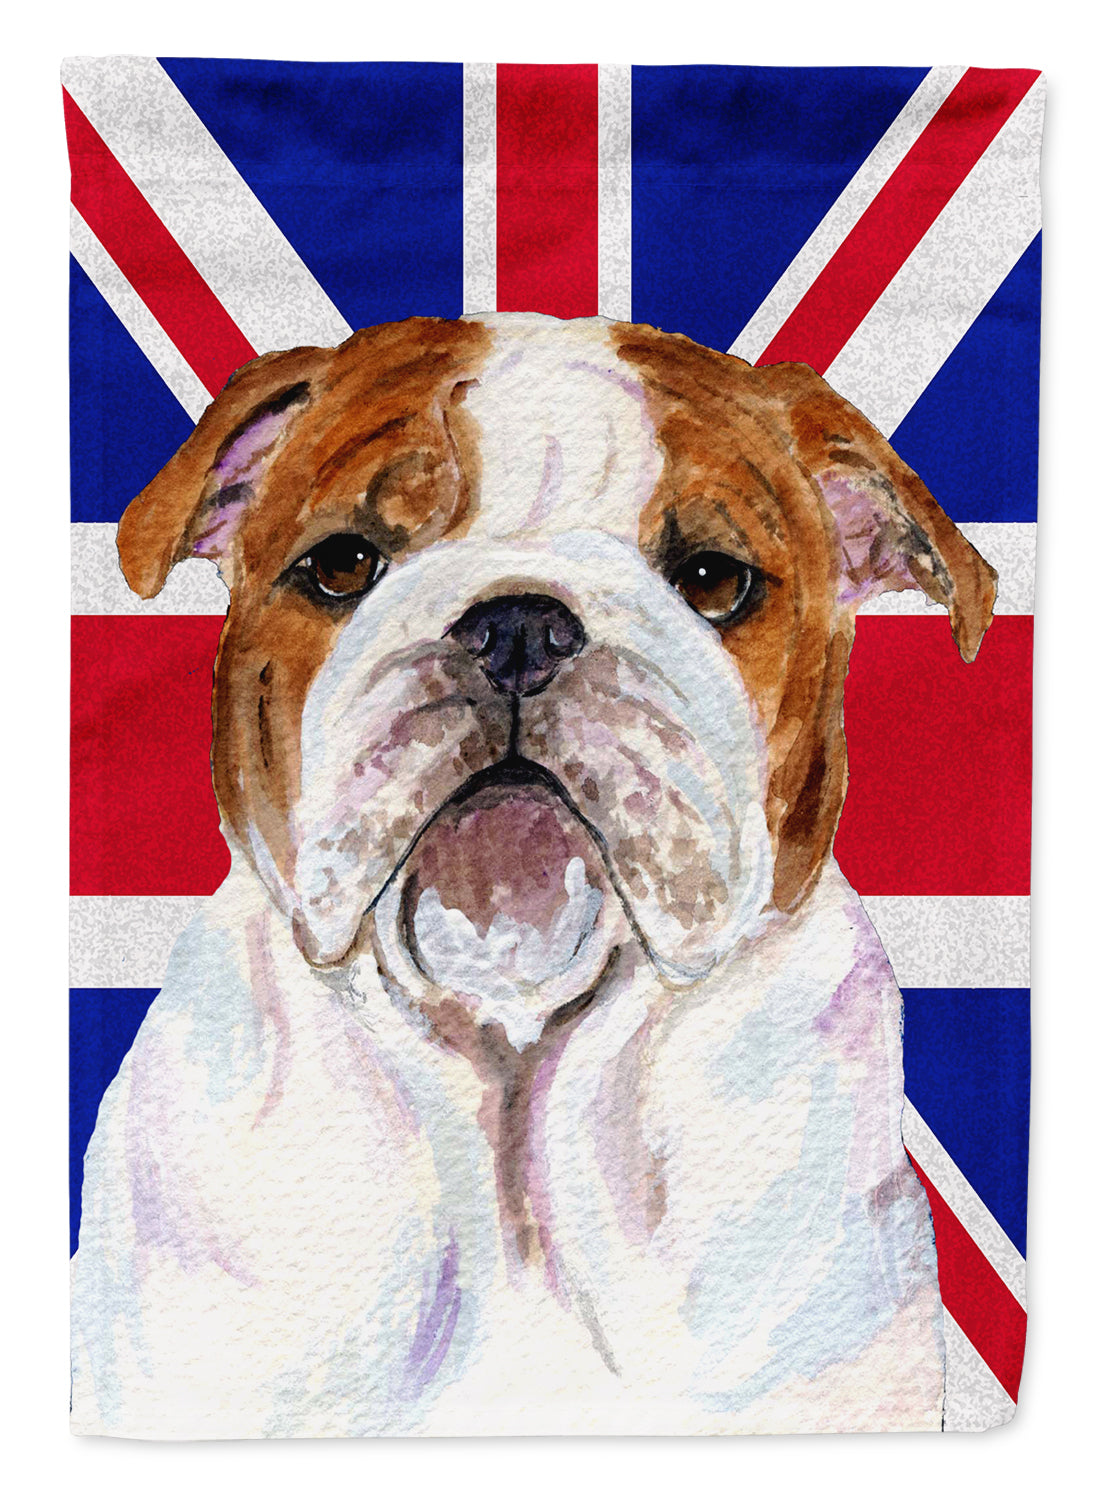 English Bulldog with English Union Jack British Flag Flag Garden Size SS4926GF  the-store.com.